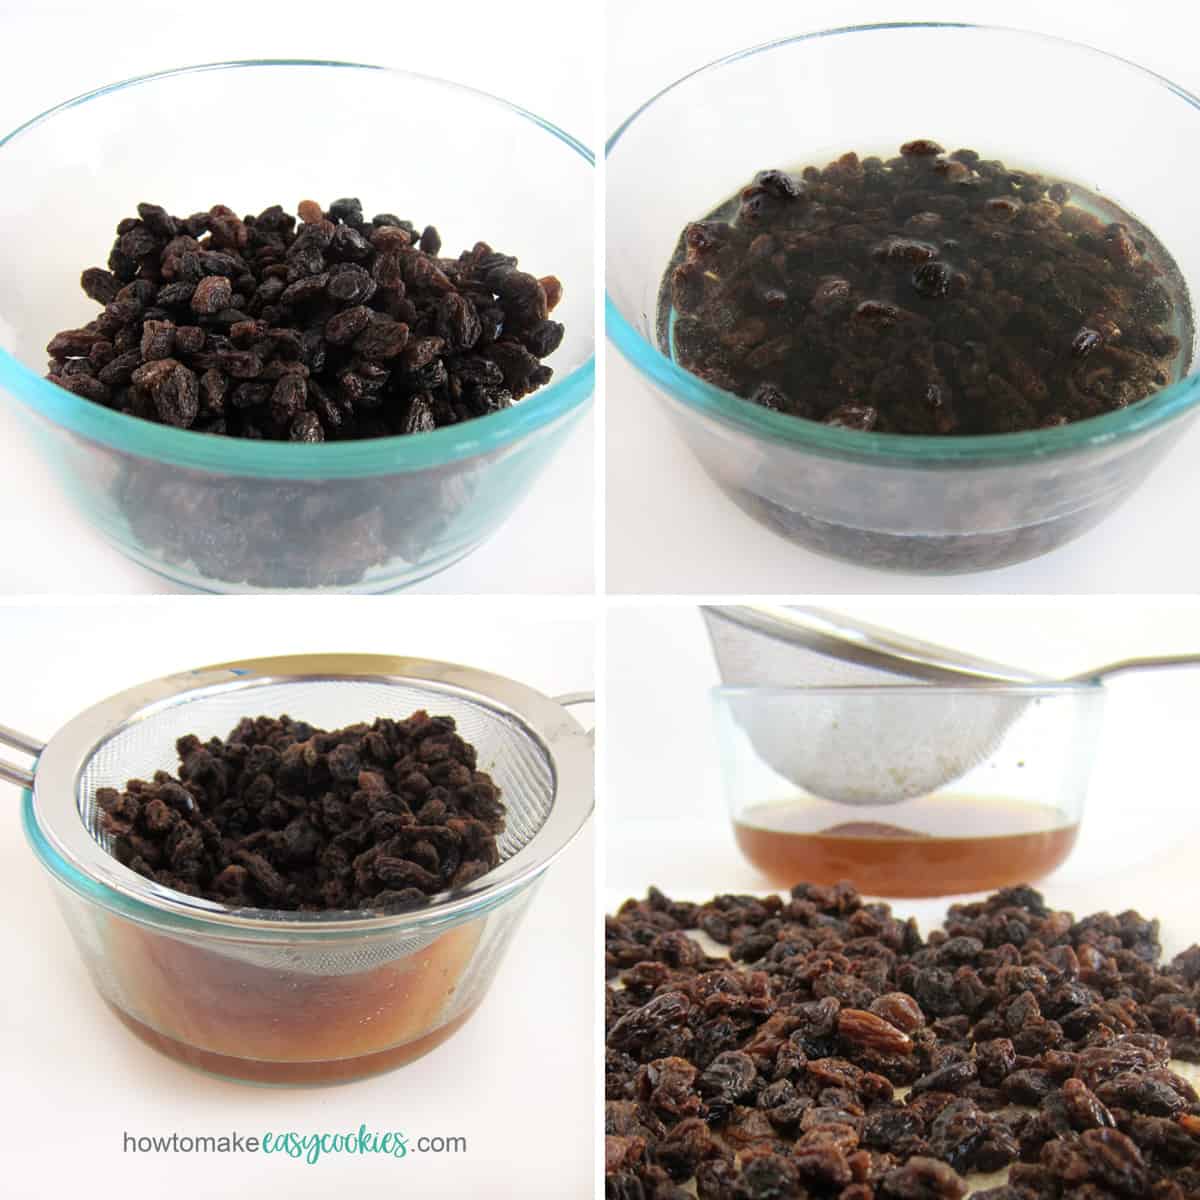 Soften raisins by soaking the raisins in hot water, then drain off the liquid.